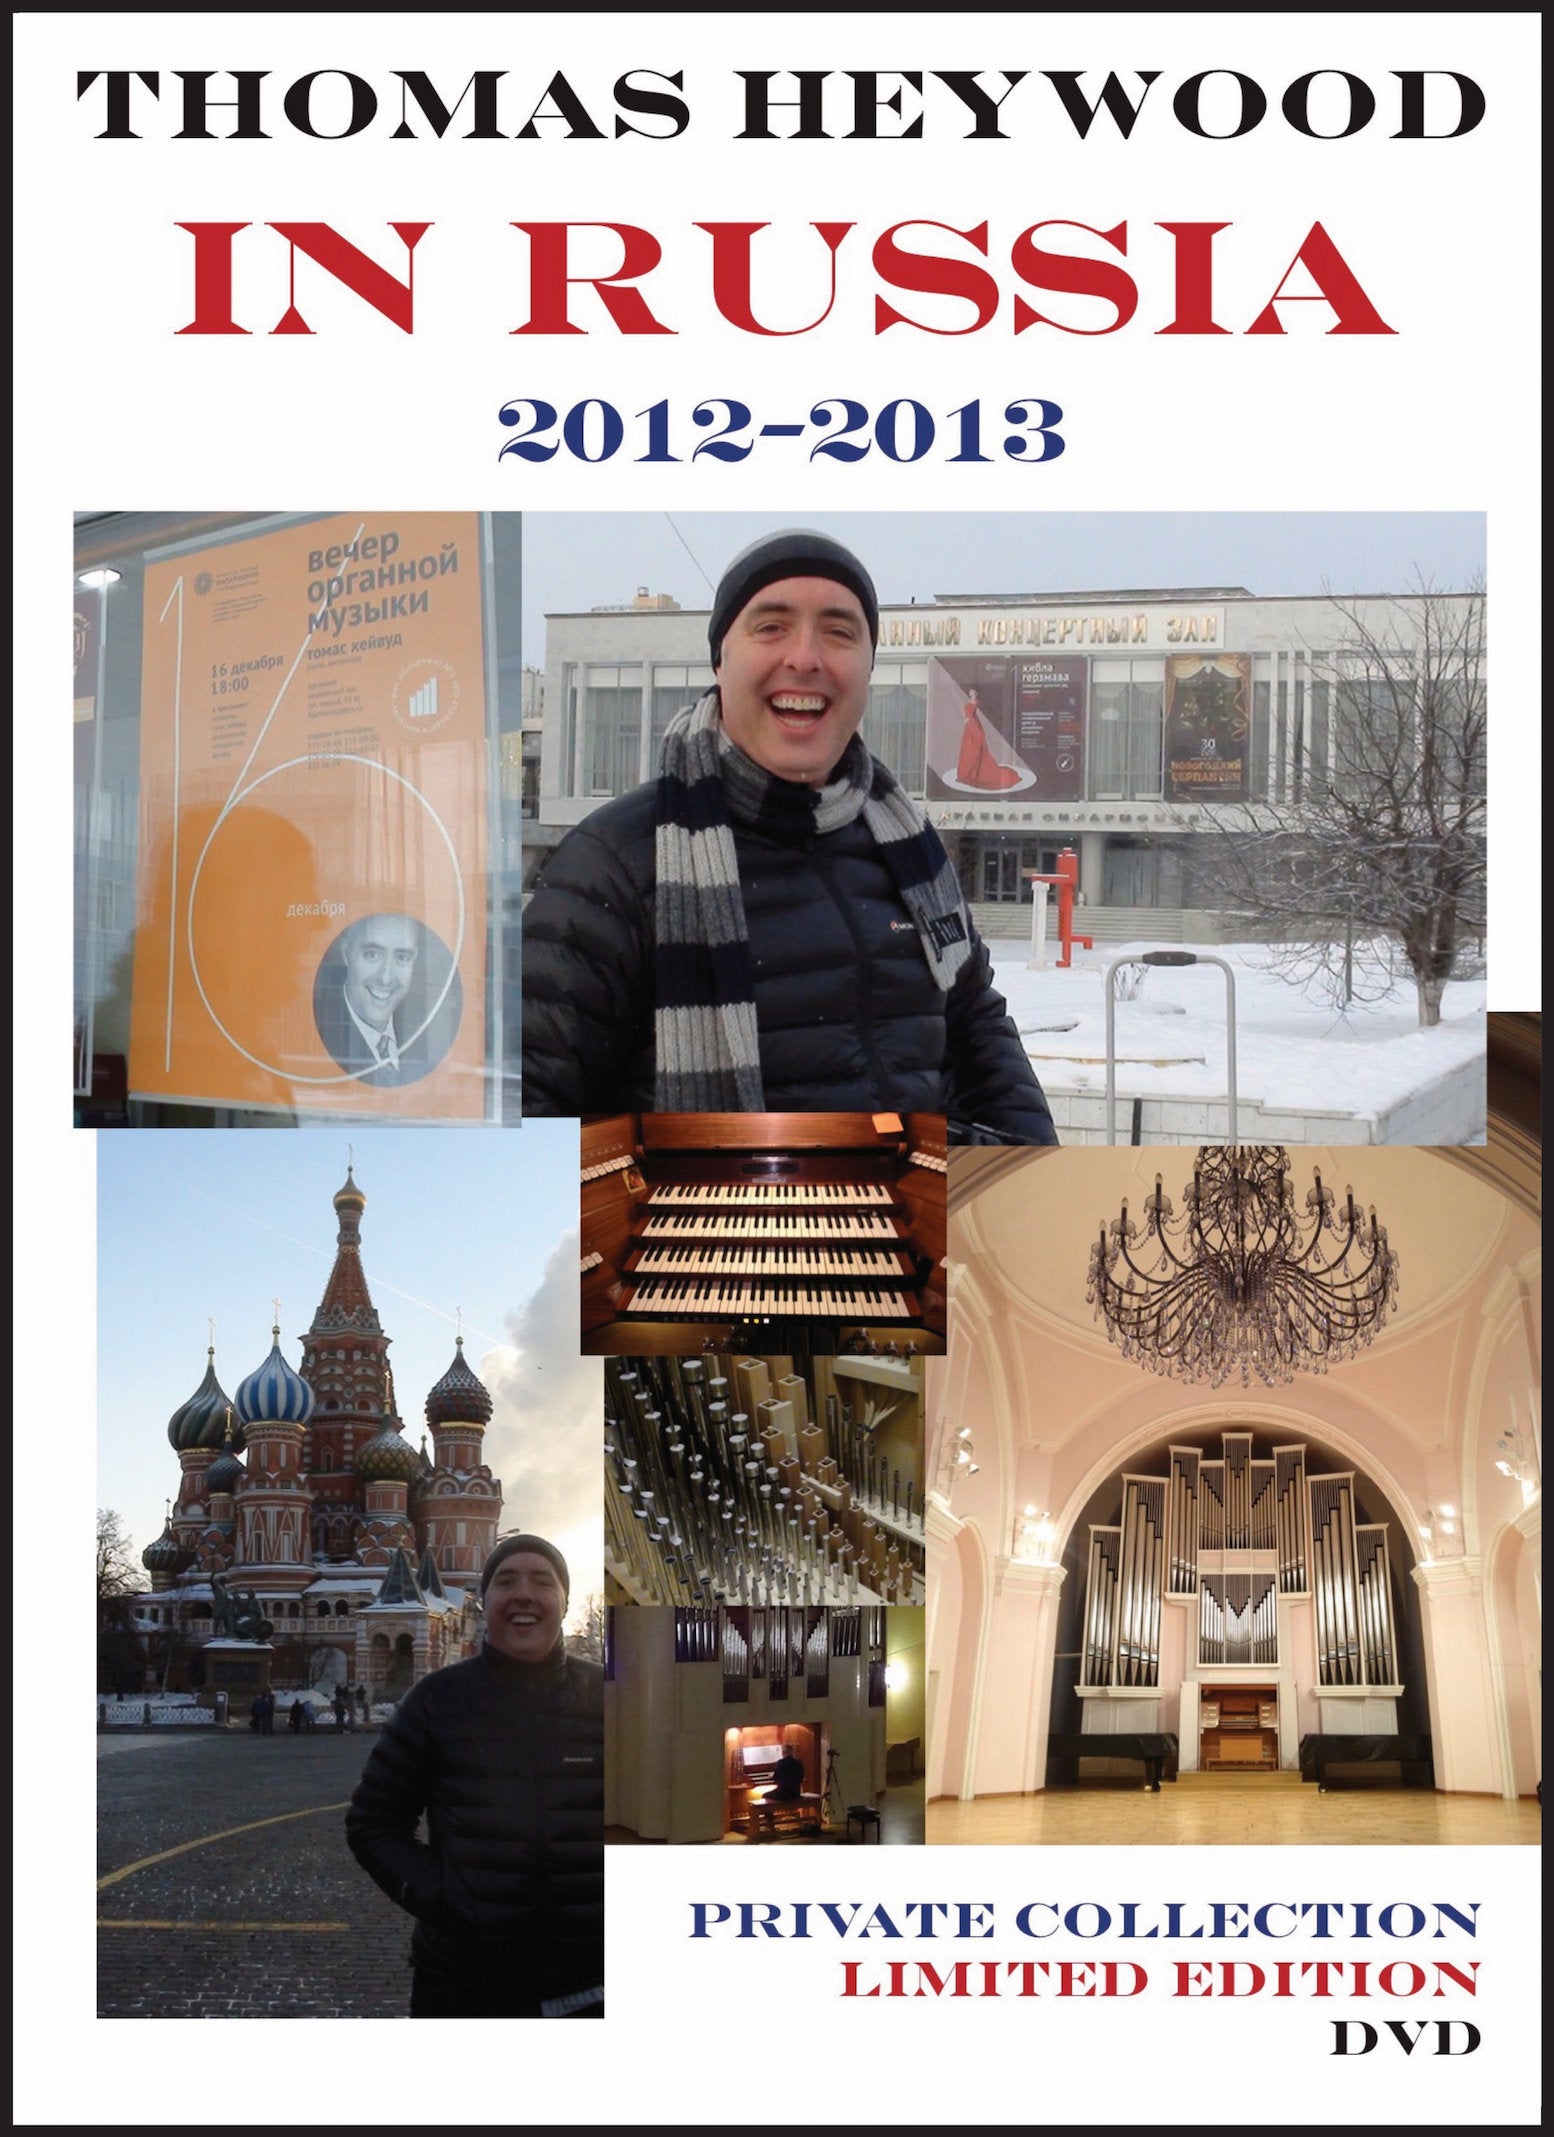 Thomas Heywood in Russia • 2012-2013 (DVD) | Thomas Heywood | Concert Organ International